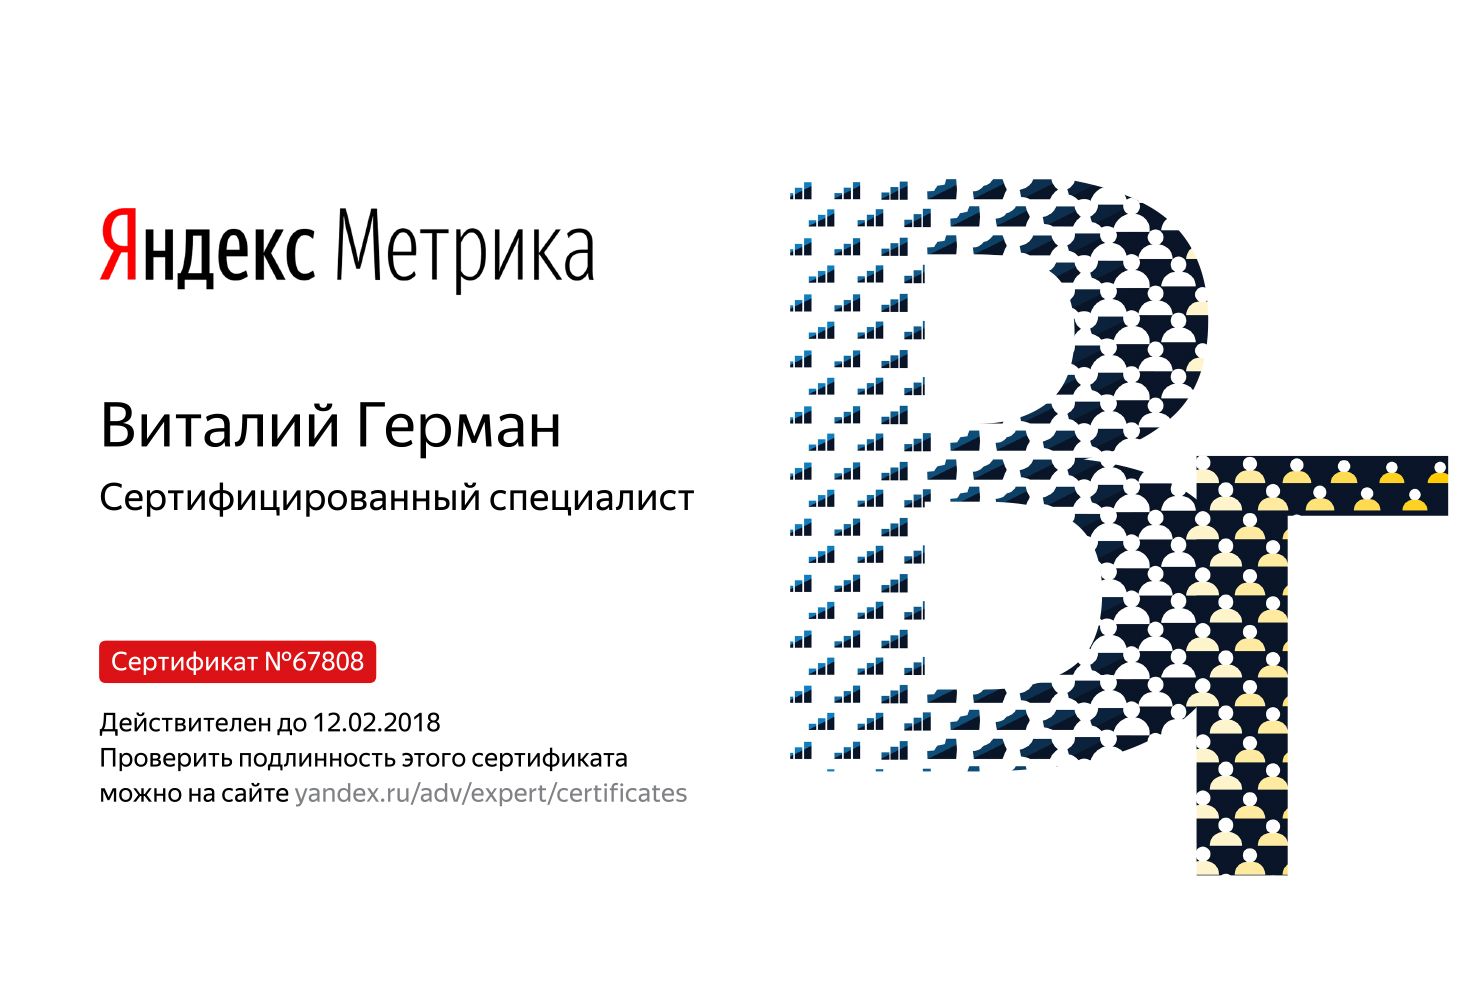 Сертификация Яндекс Метрика 2018